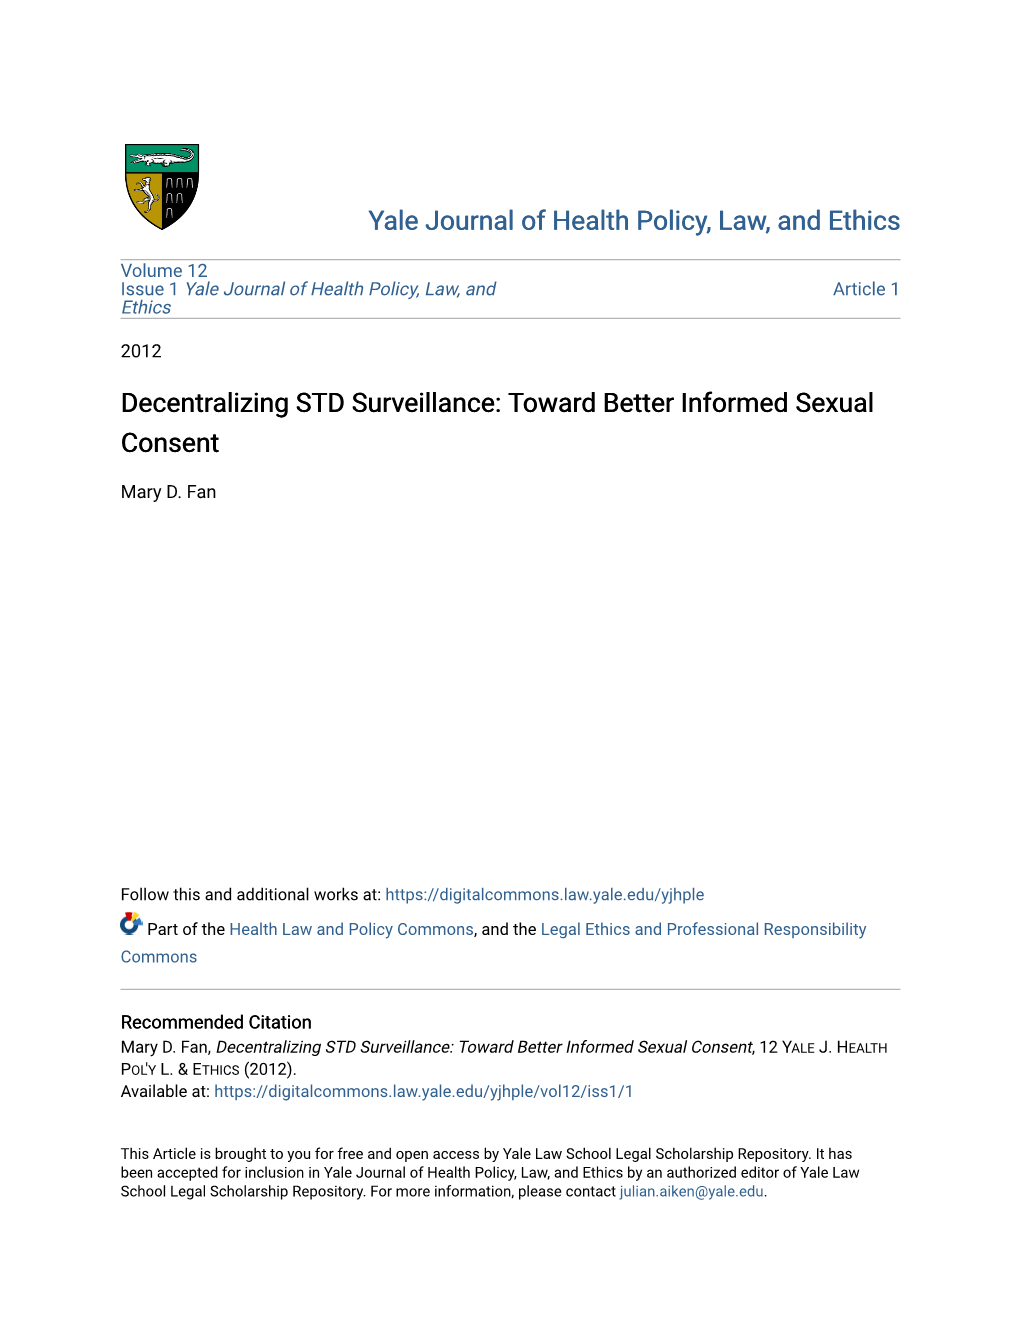 Decentralizing STD Surveillance: Toward Better Informed Sexual Consent